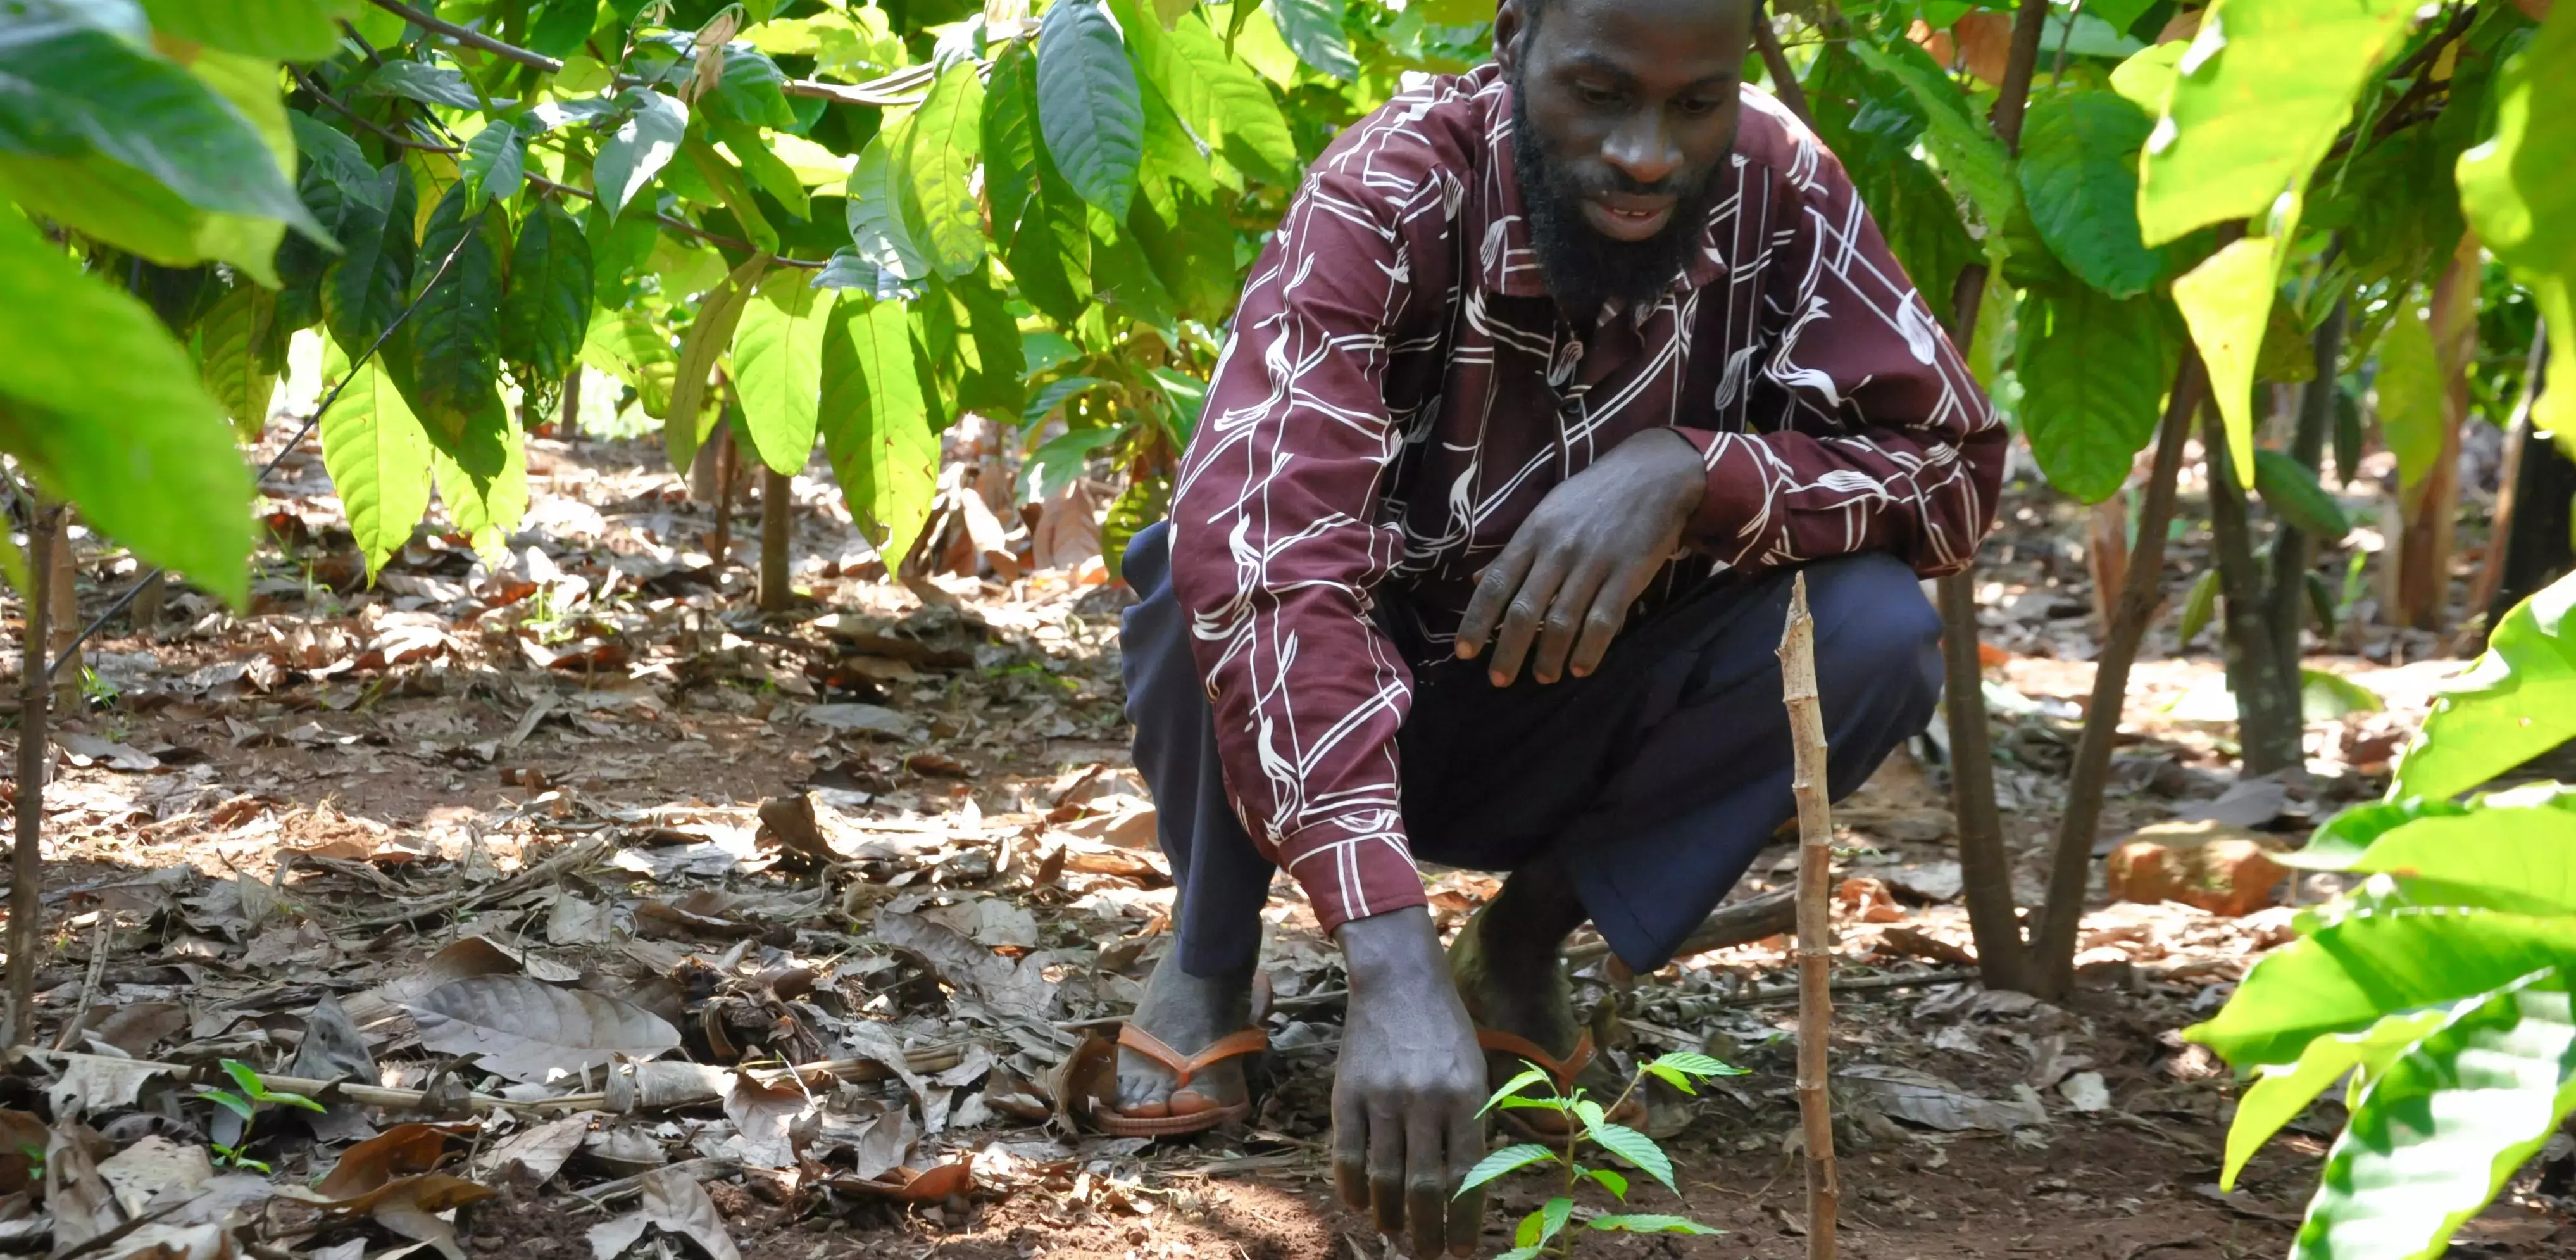 Restoring wildlife habitat in Uganda with indigenous trees